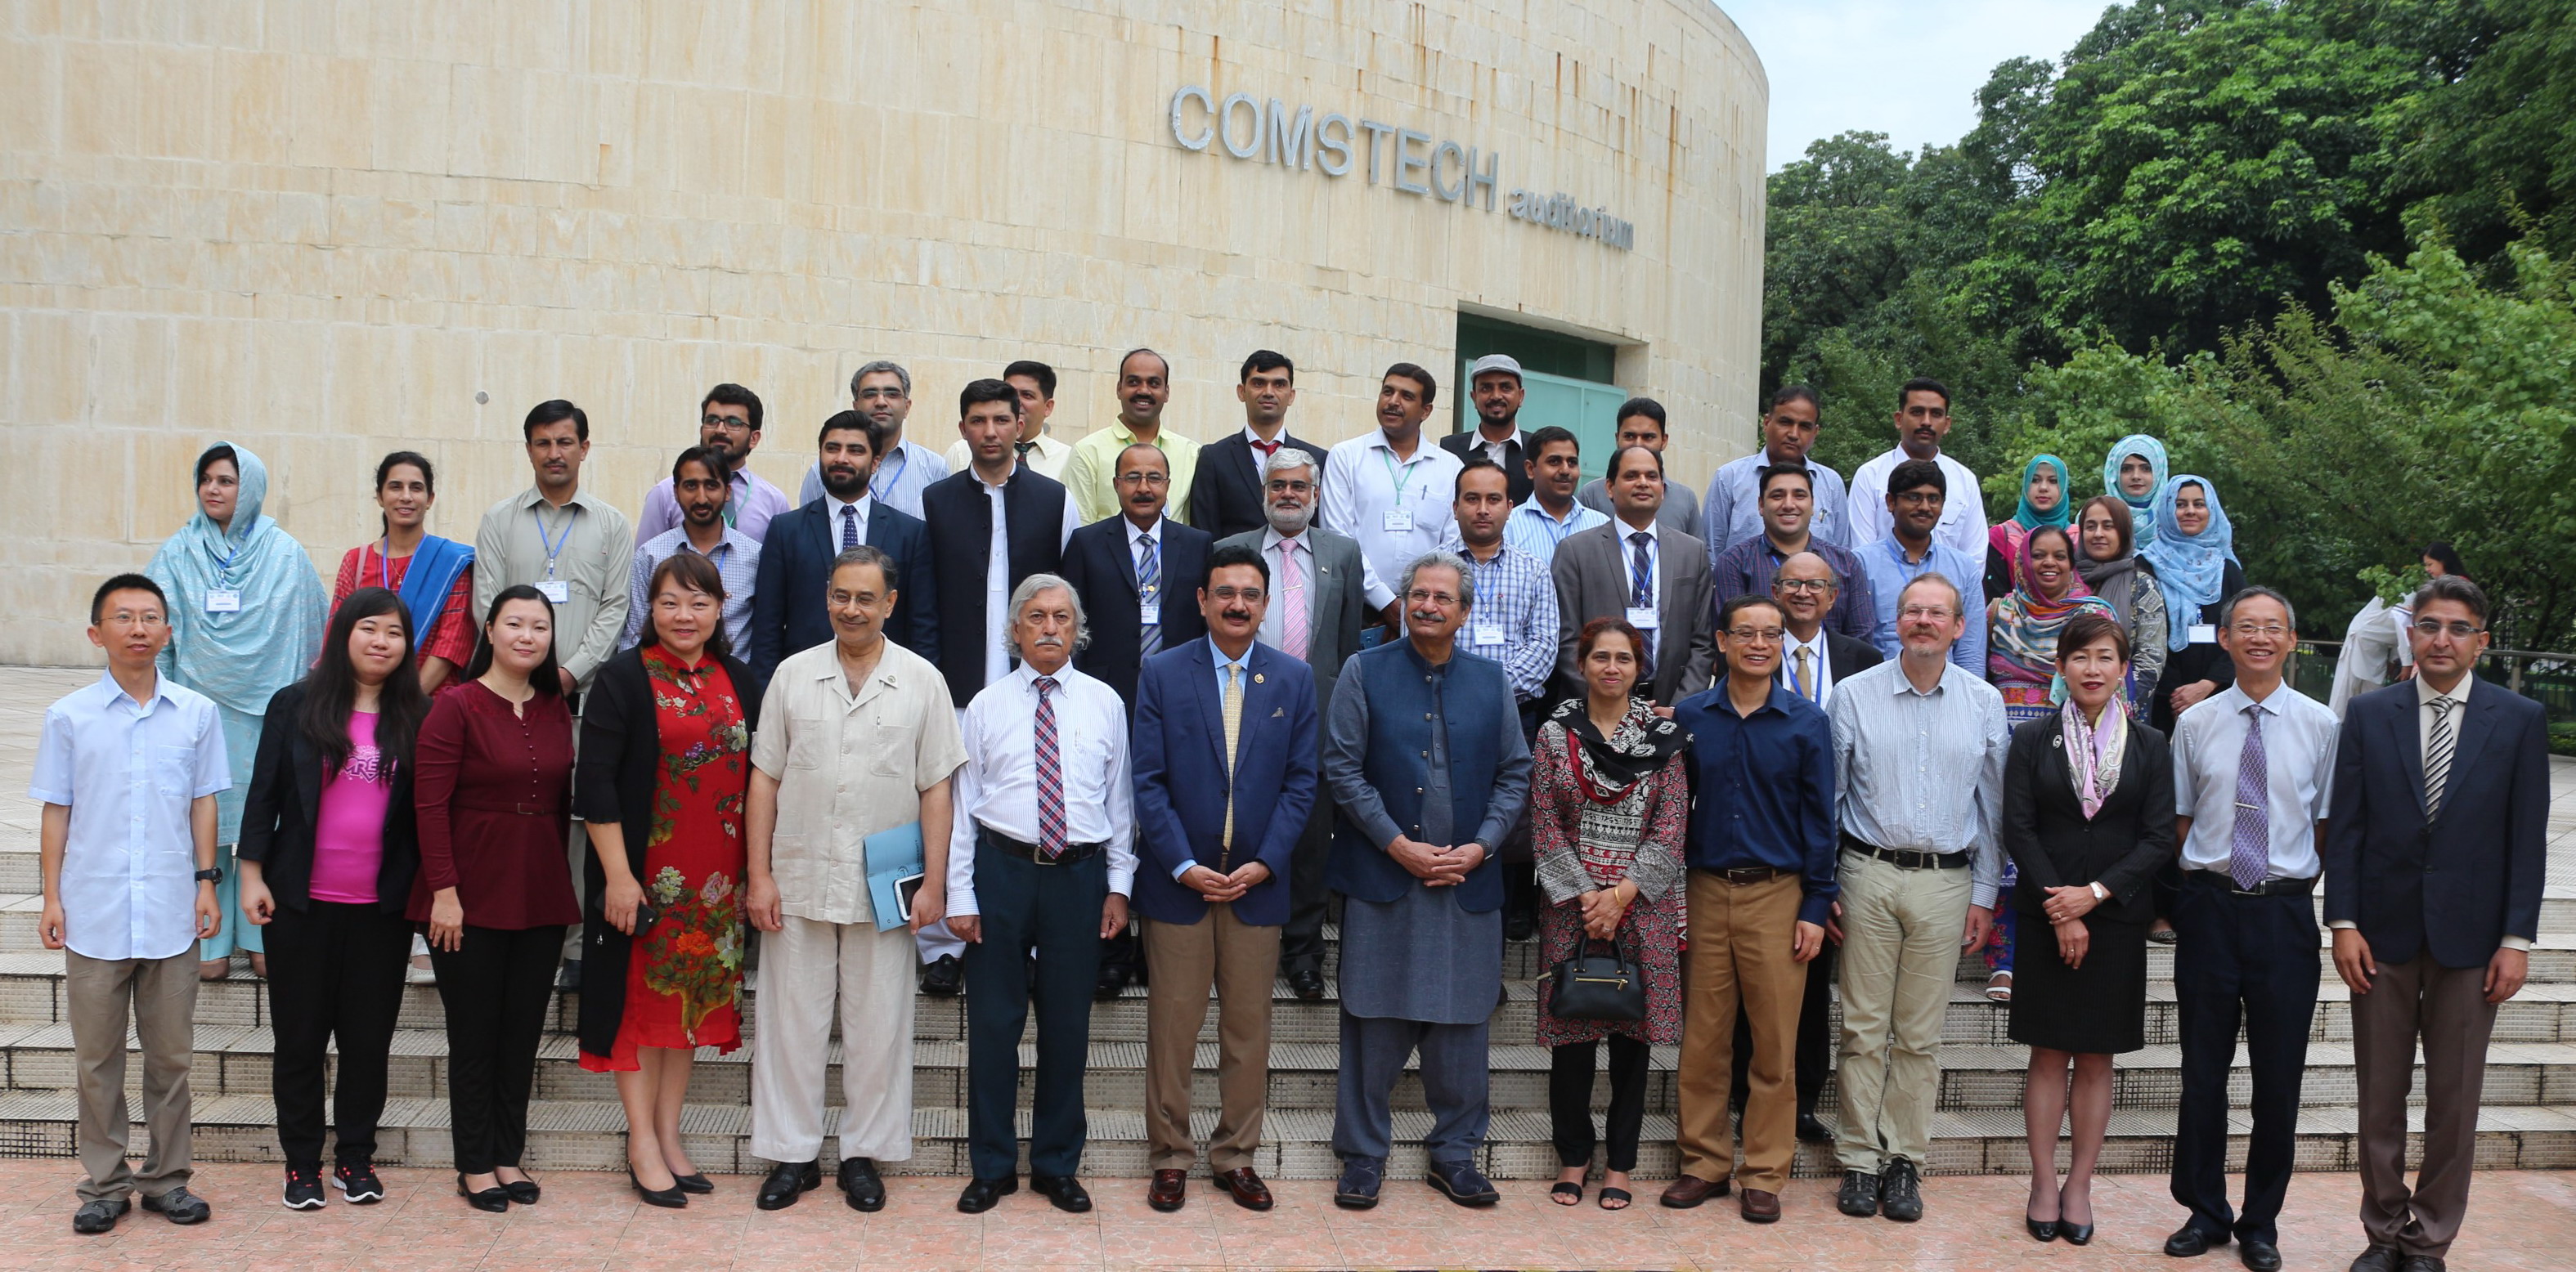 BHBD Symposium held in Pakistan in July 2019